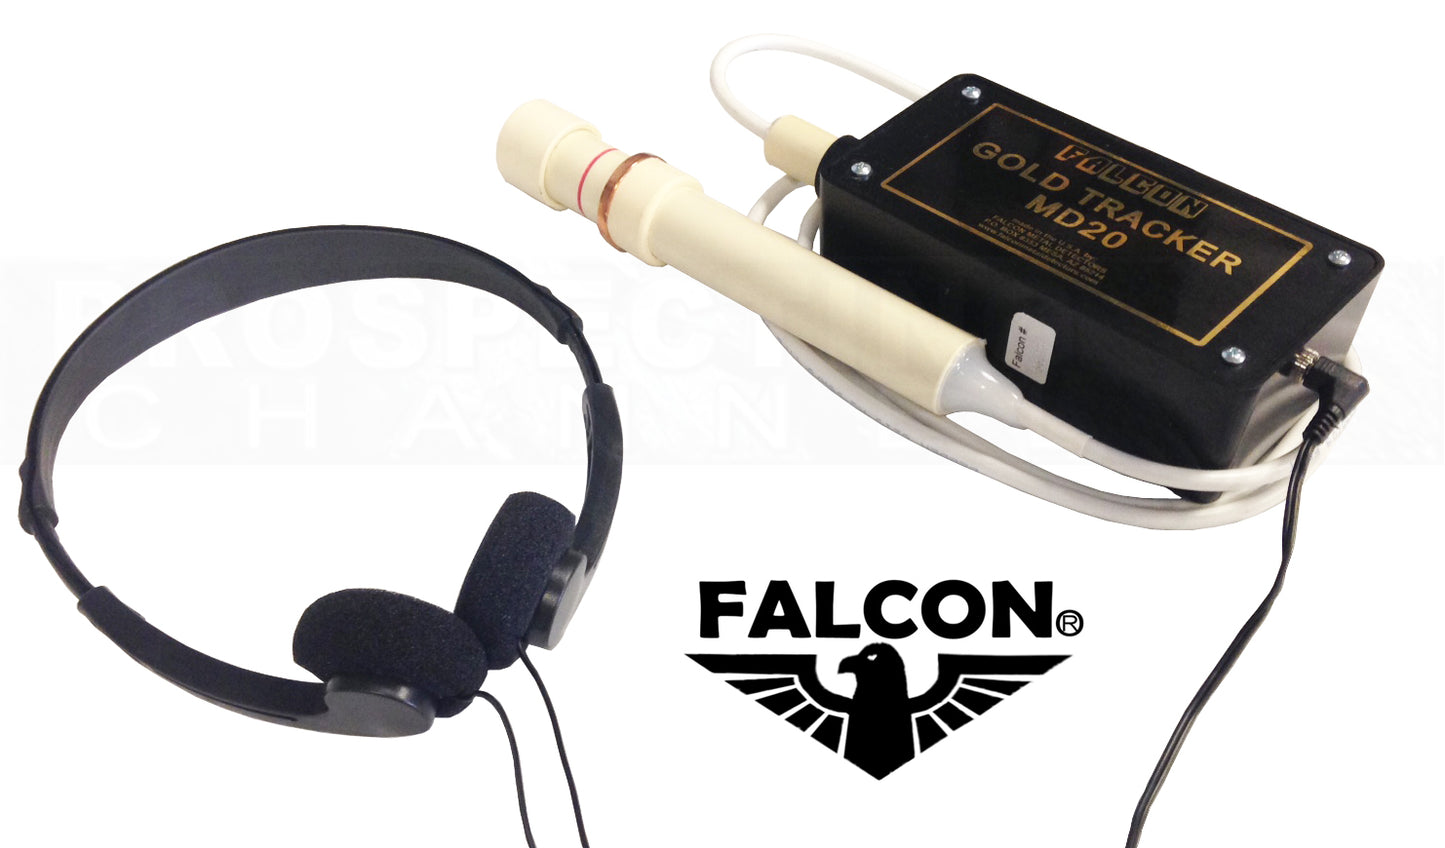 Falcon MD20 Metal Detector waterproof Probe + Holster Handle Headphones Warranty